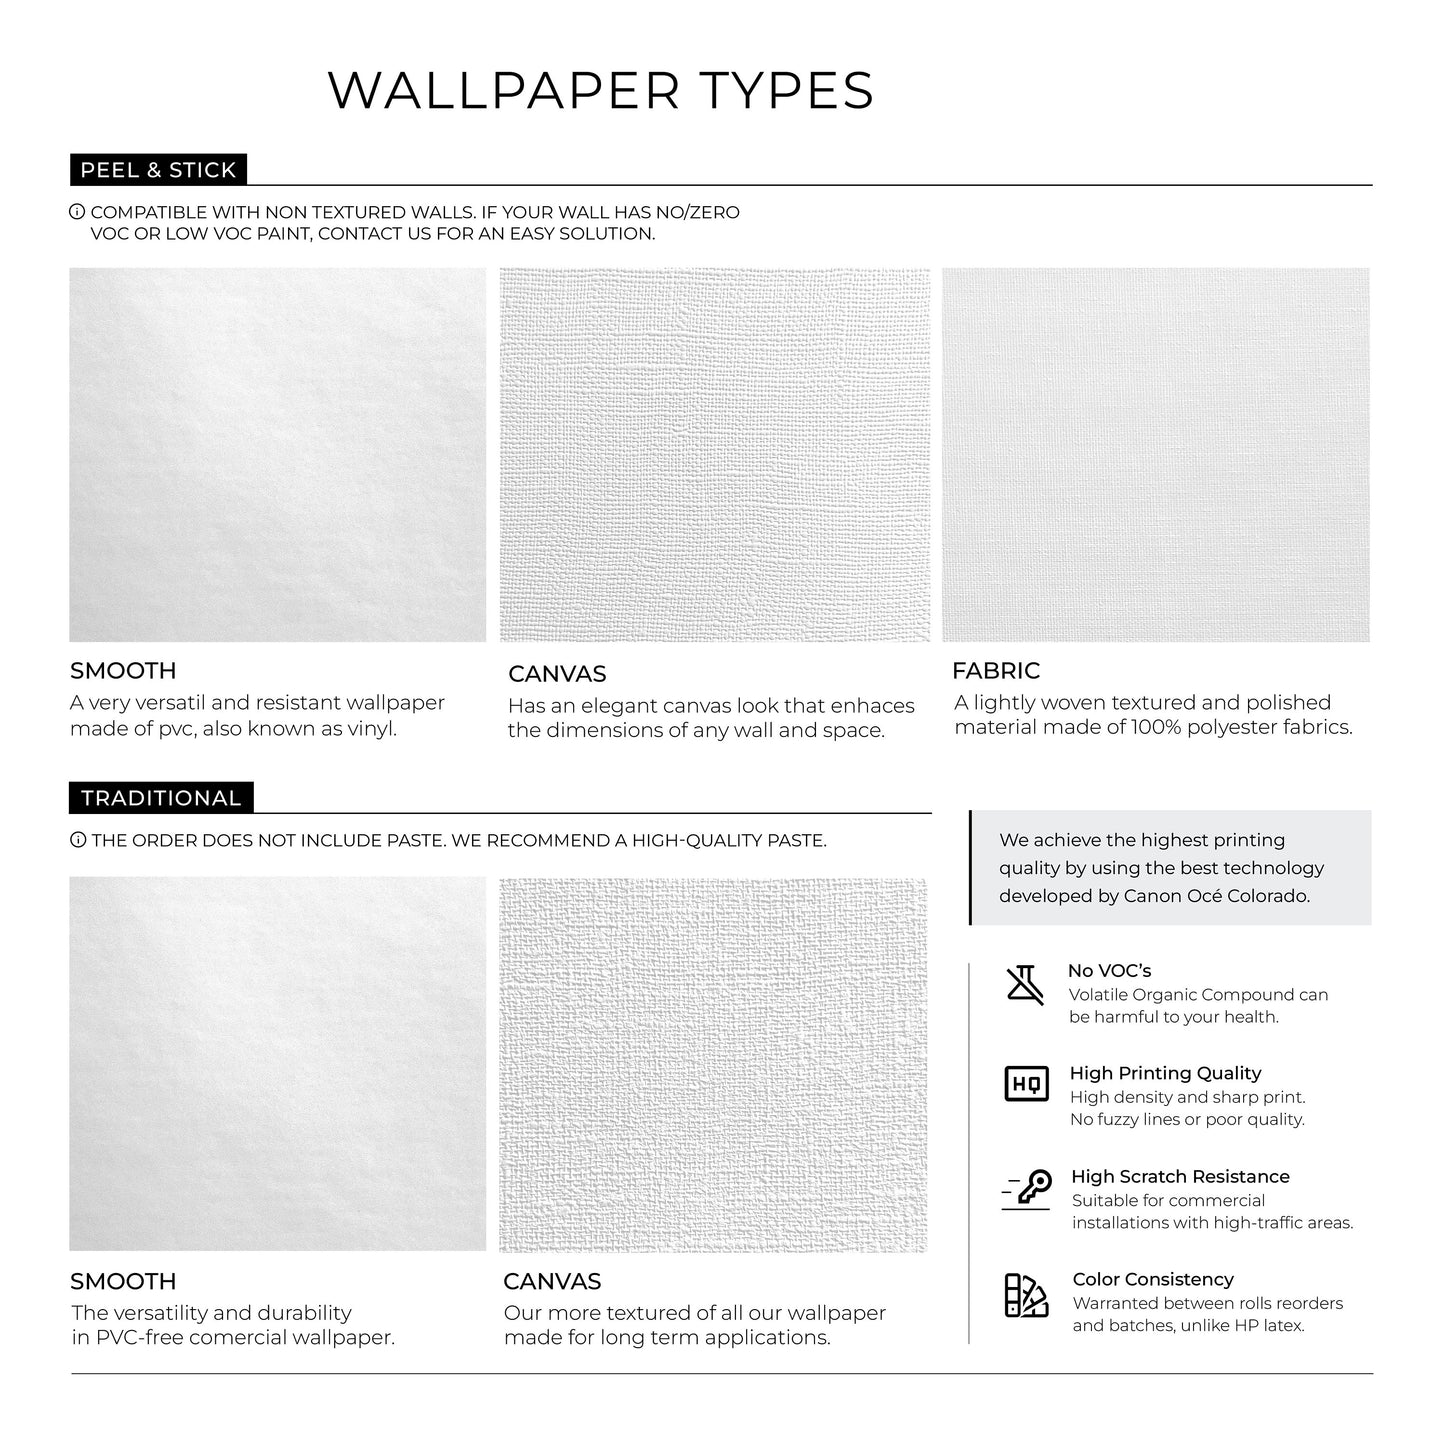 Removable Wallpaper Wallpaper Blue Waves Wallpaper Peel and Stick Wallpaper Wall Paper - A976